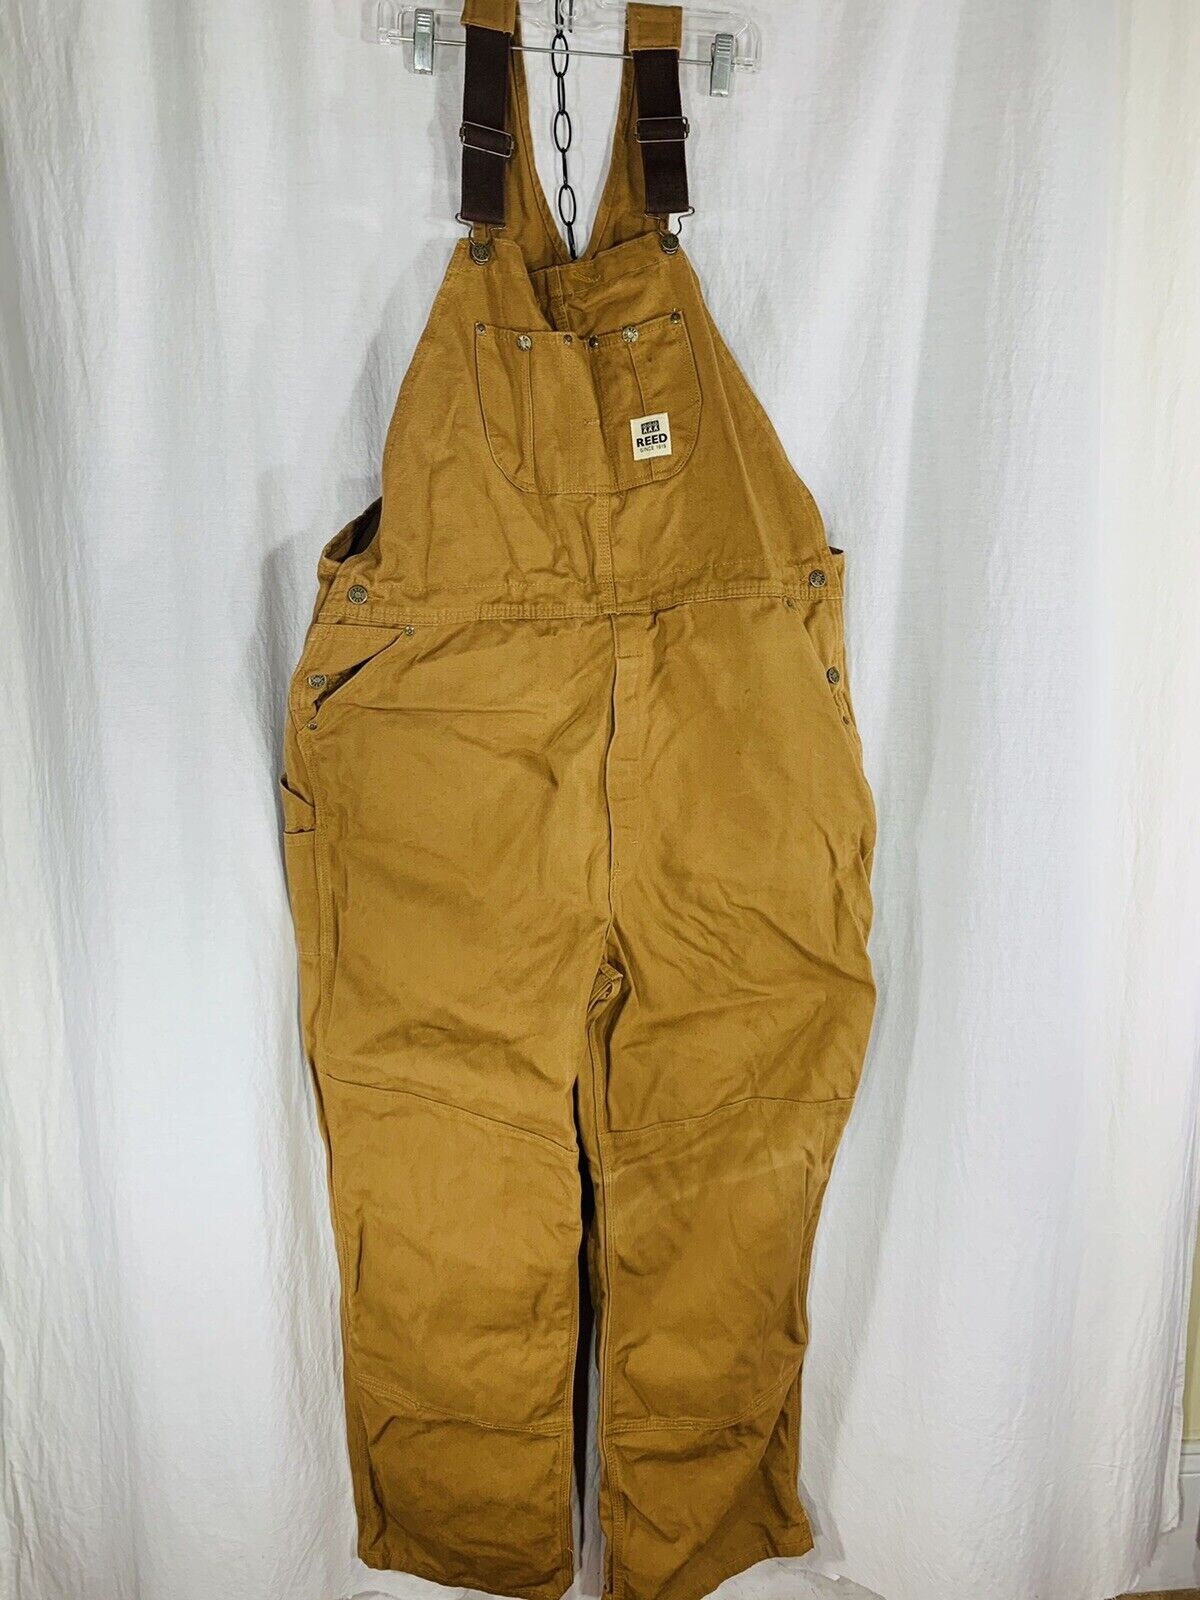 Carhartt Original Dungaree Fit Duck Work Carpenter Pants Jeans Men's 38 x  34 Euc